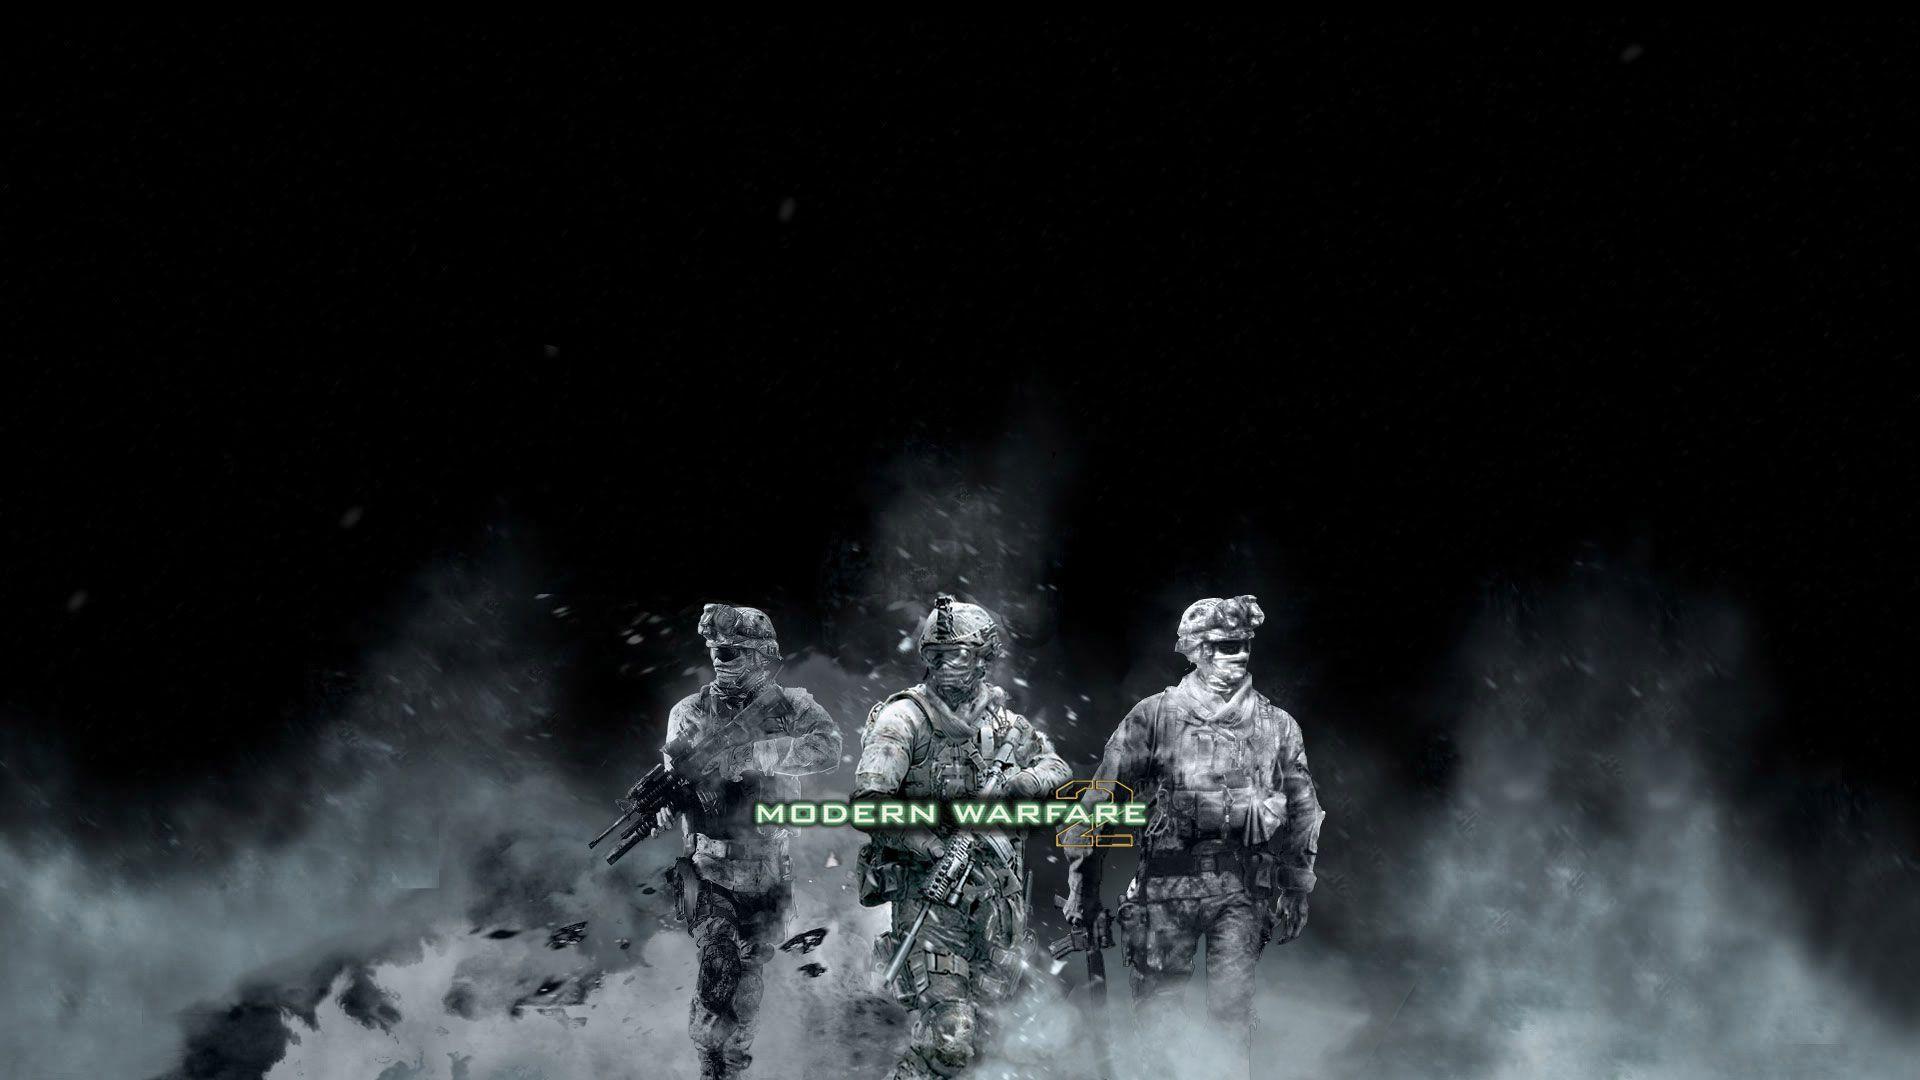 Call Of Duty Modern Warfare 2 background wallpaper, Call Of Duty Modern Warfare 2, Game